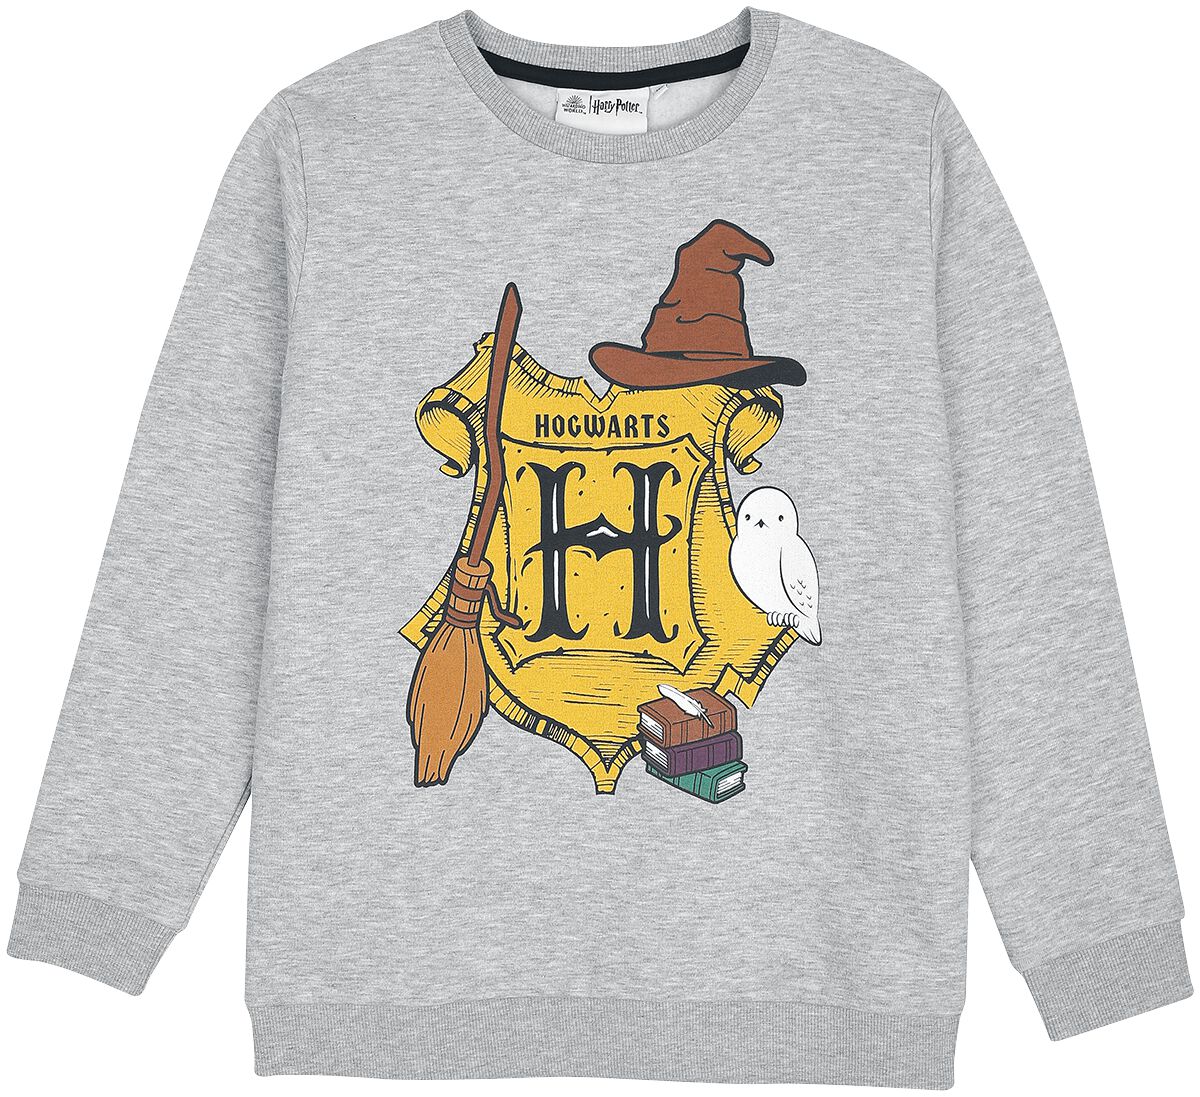 Kids - Hogwarts, Harry Potter Felpa